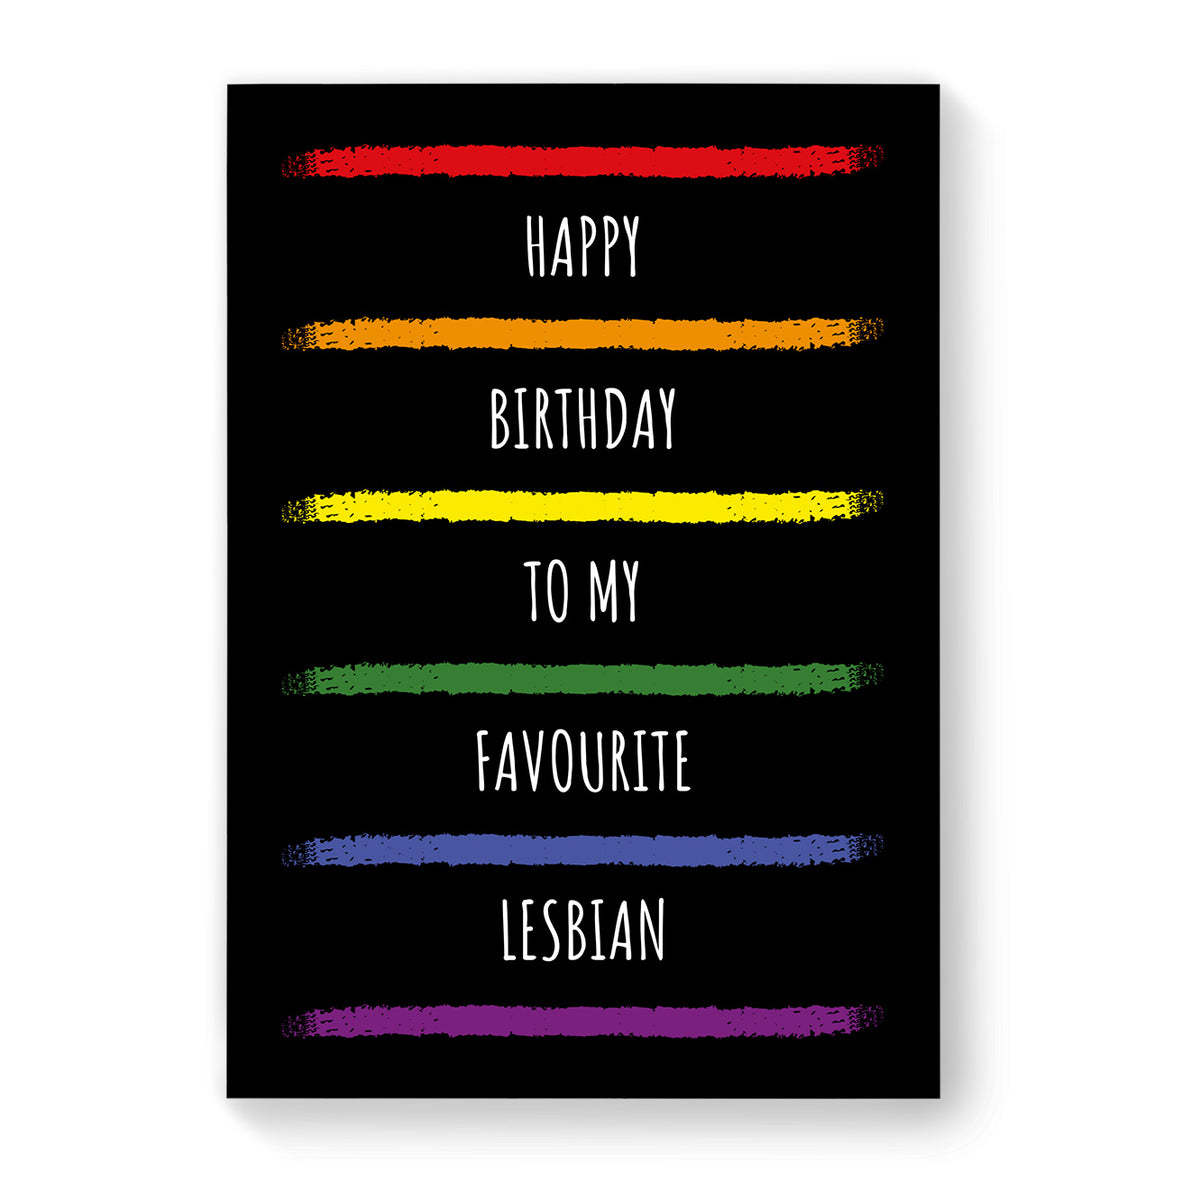 Happy Birthday to my Favourite Lesbian - Lesbian Birthday Card - Black Rainbow Stripes | Gift